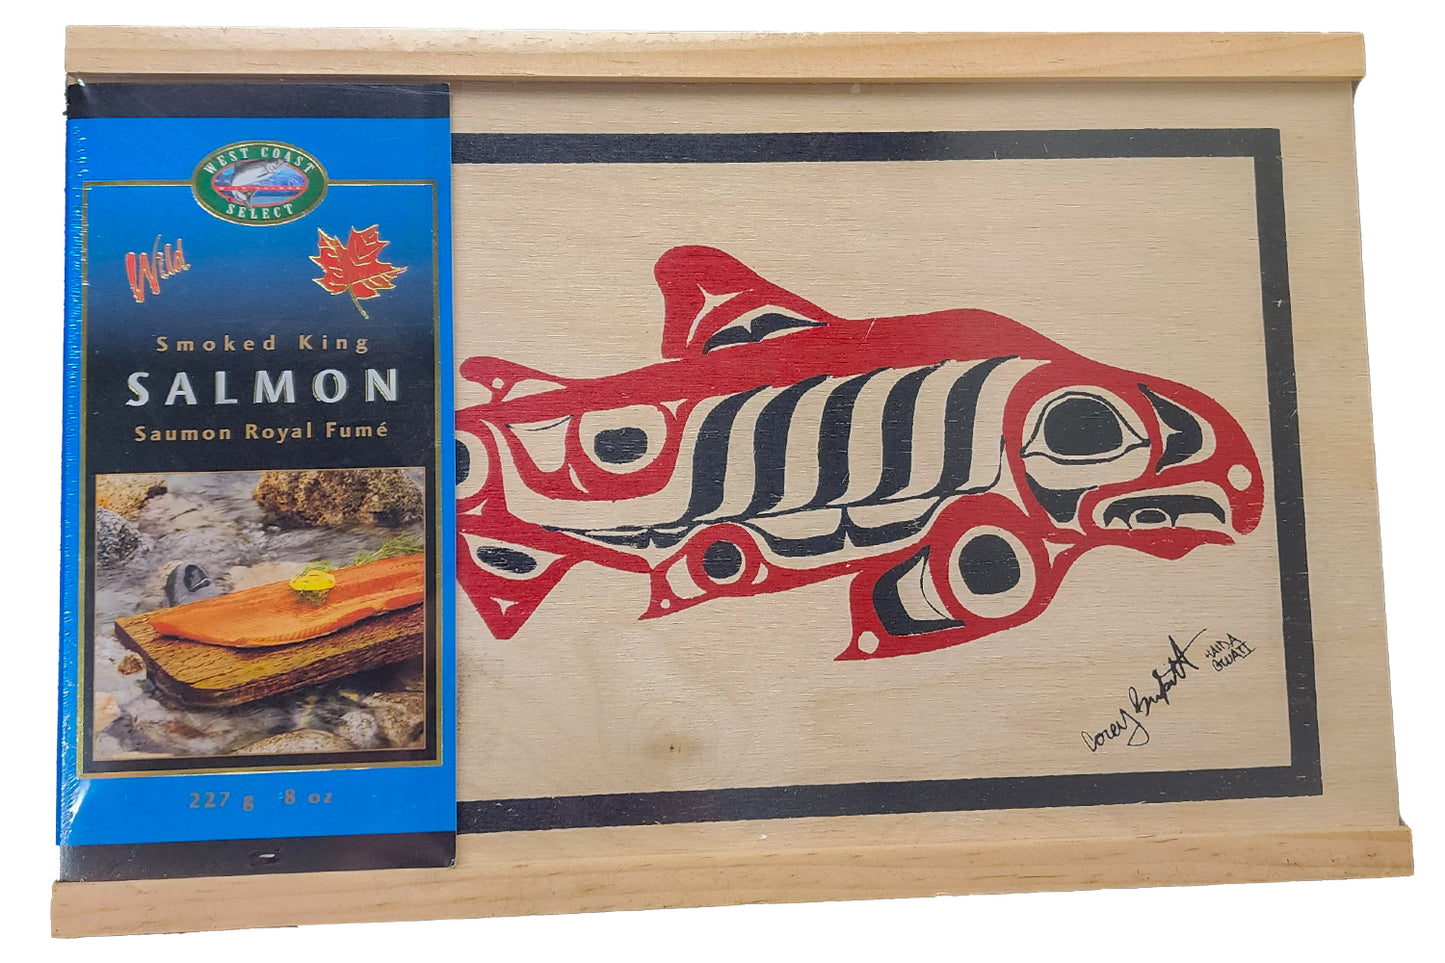 Smoked King Salmon 227g (Includes handmade Haida artwork box)